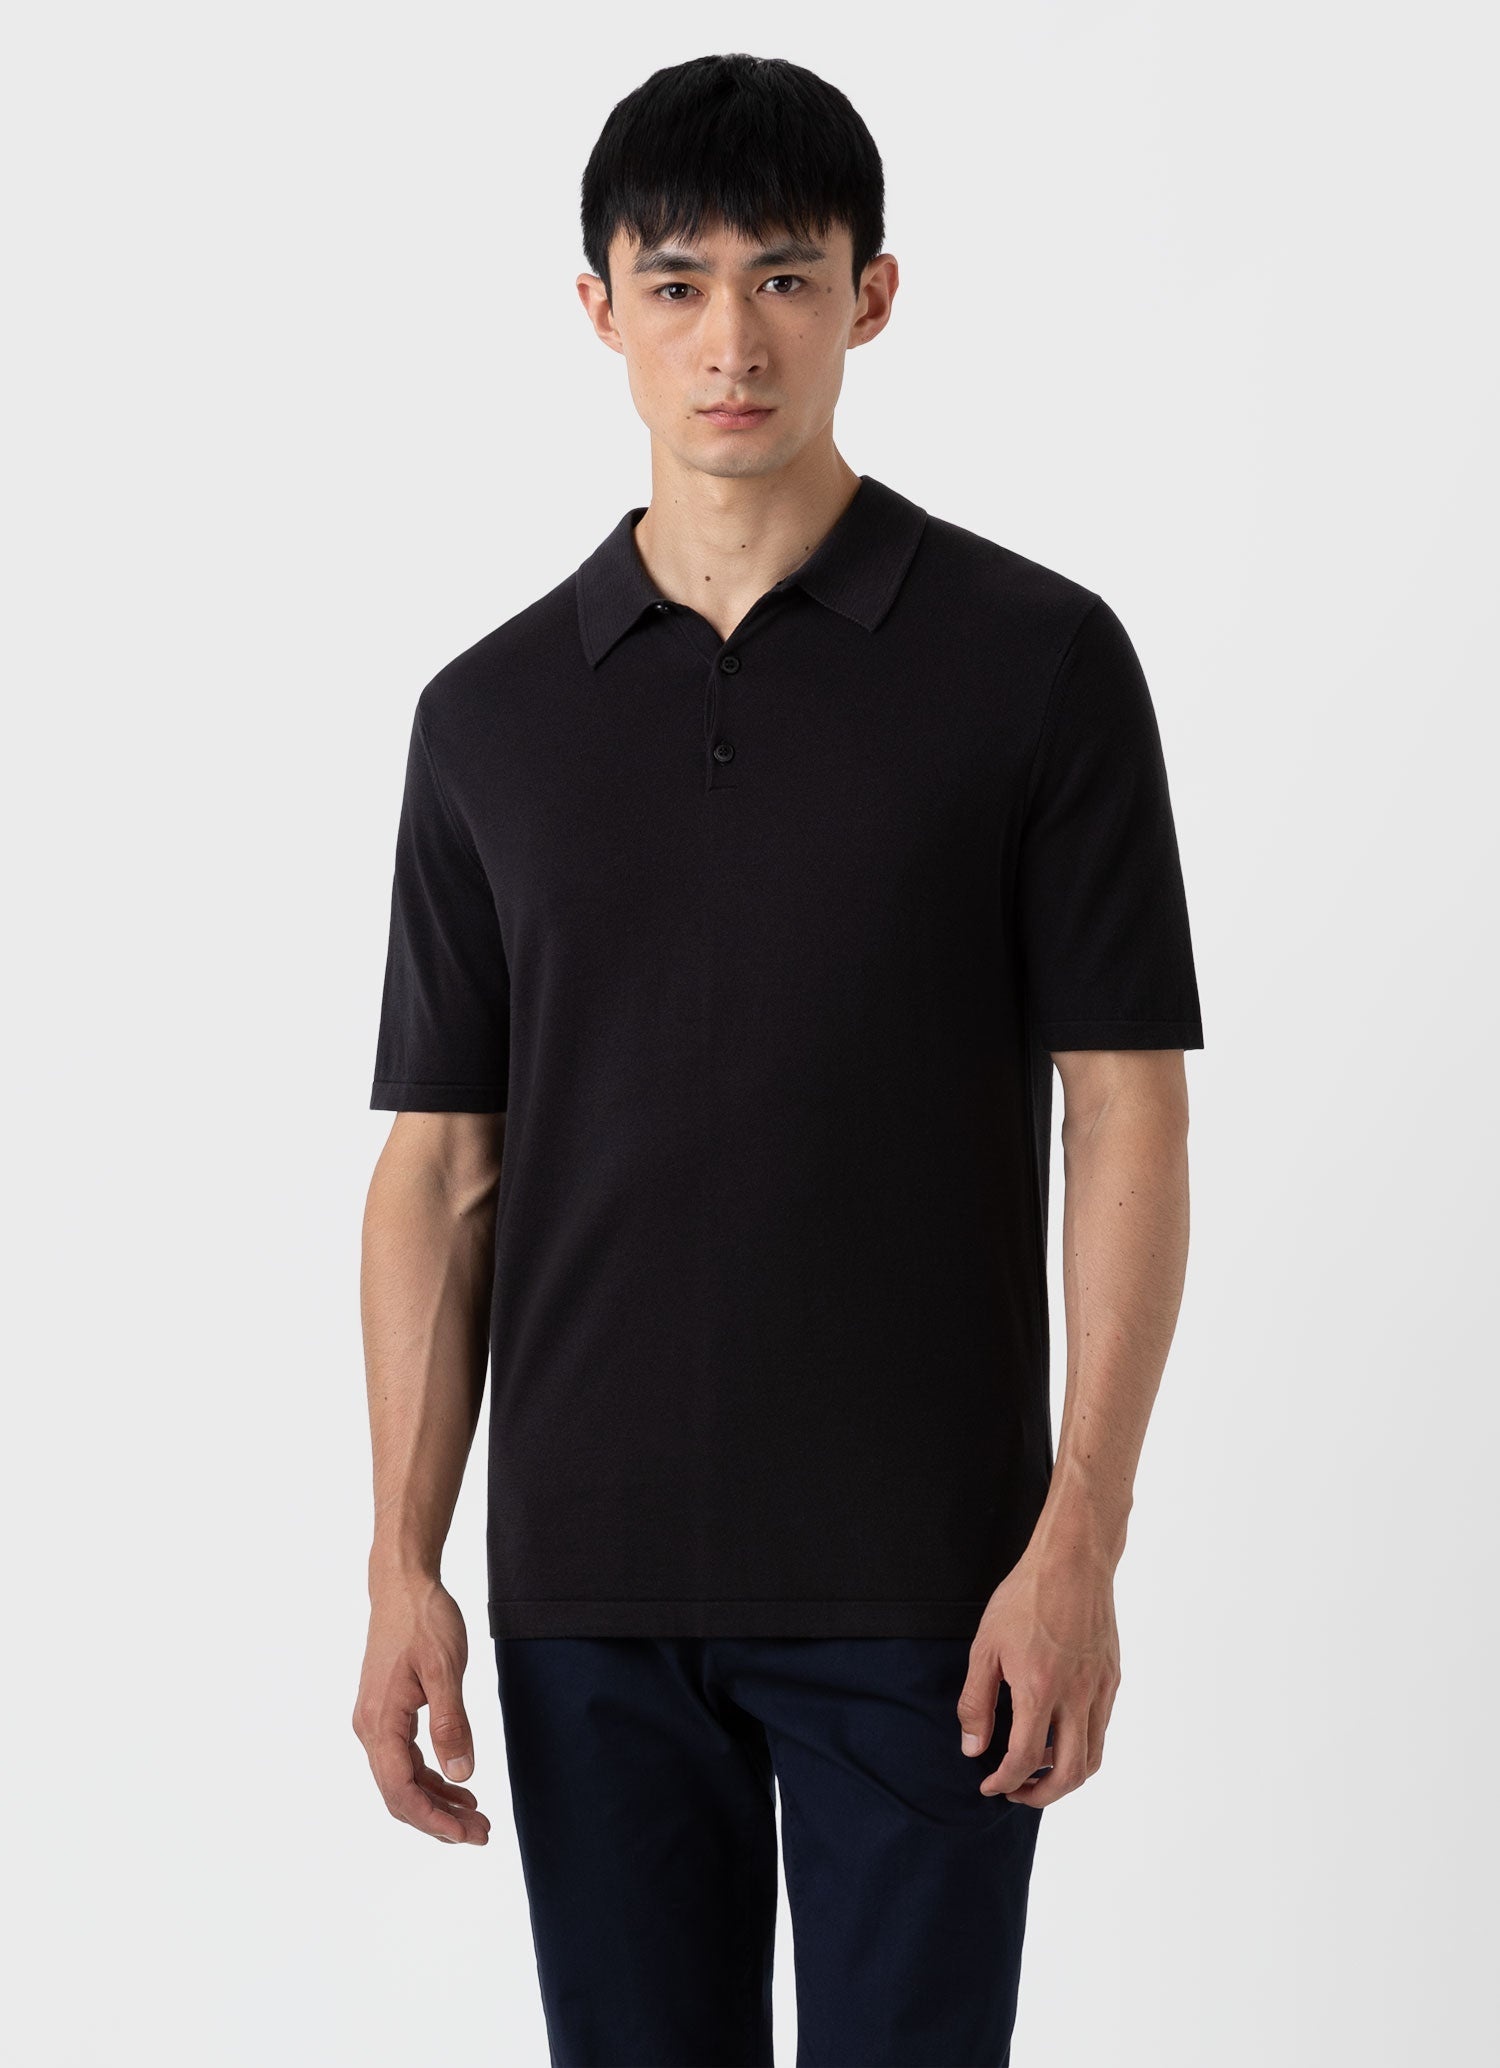 Sea Island Cotton Knit Polo Shirt - 3